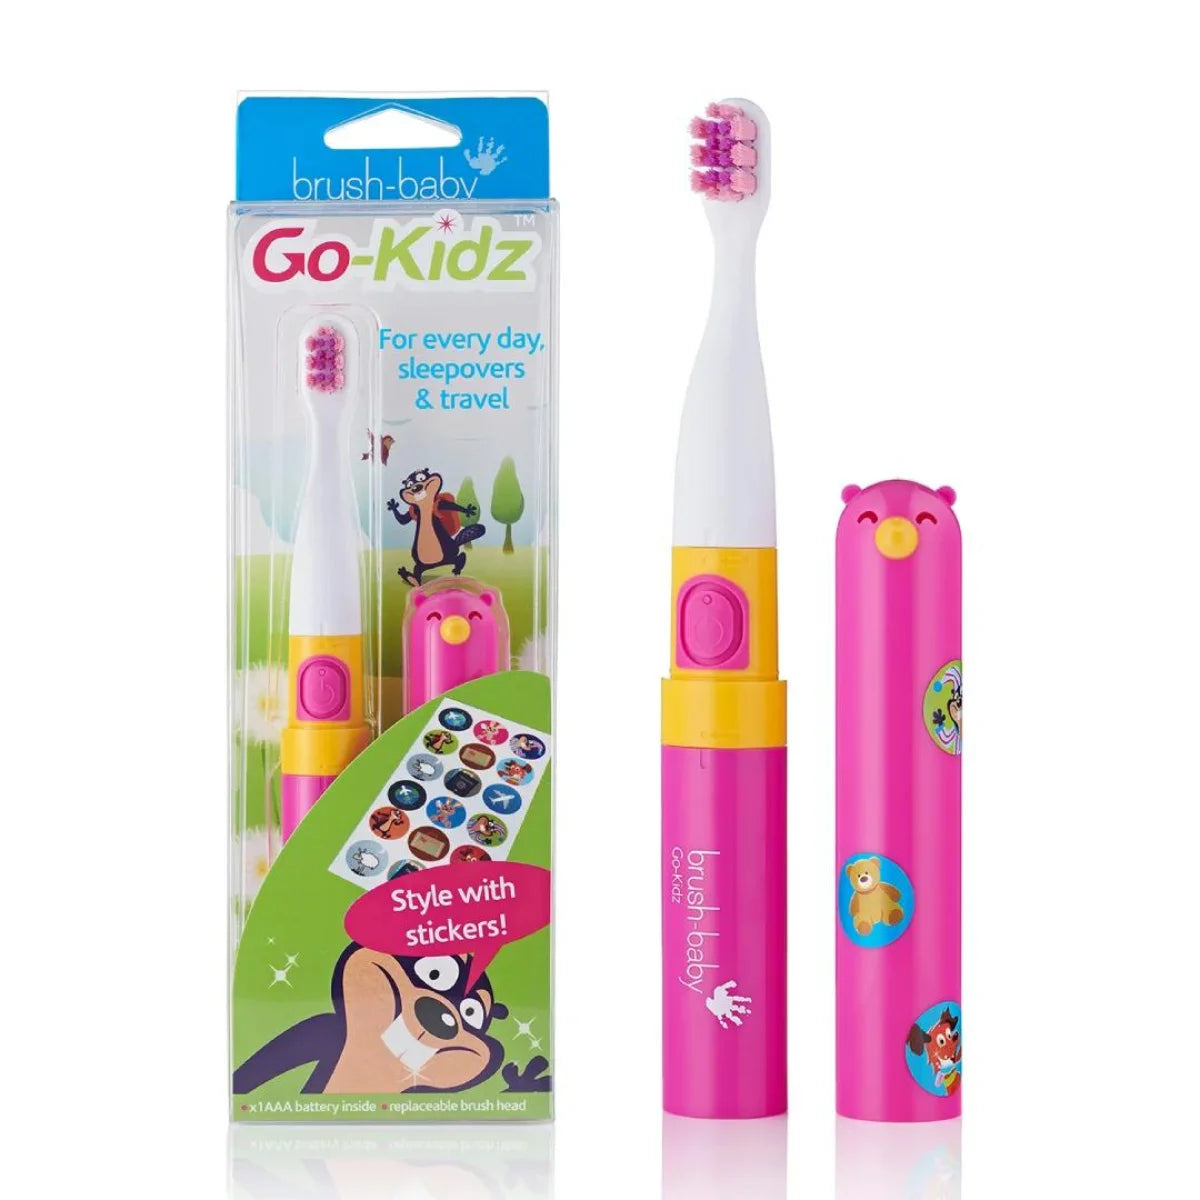 BrushbBay Go-Kidz Pink Travel Kids Electric Toothbrush 